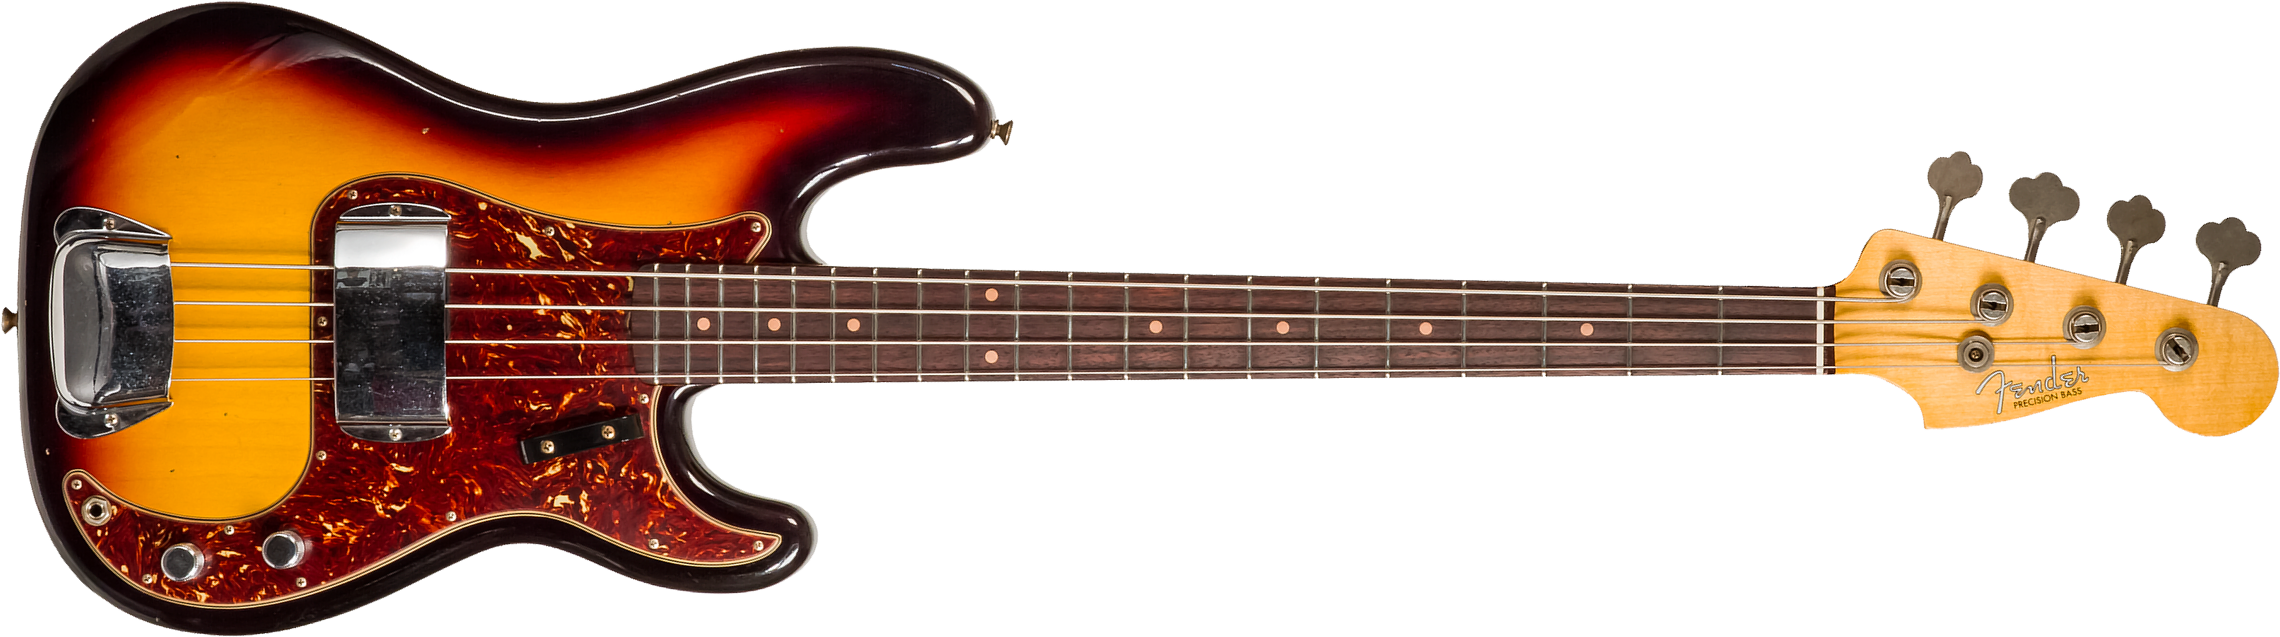 Fender Custom Shop Precision Bass 1963 Rw #cz56919 - Journeyman Relic 3-color Sunburst - Solidbody E-bass - Main picture